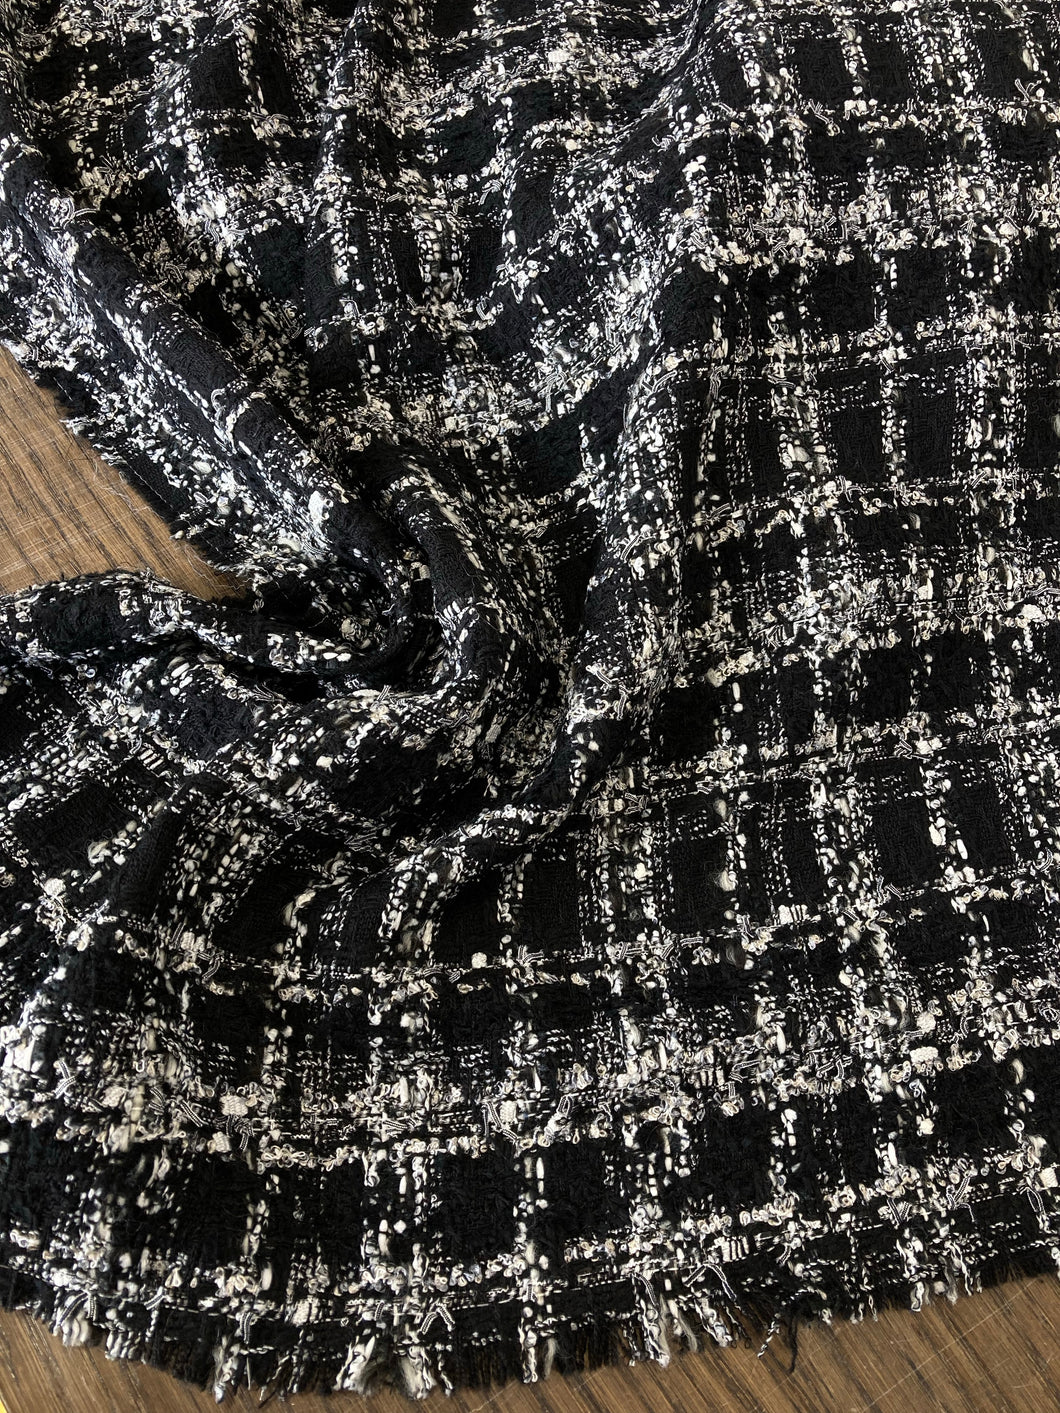 Tweed chanellina bianco nero fantasia: €41/mtl